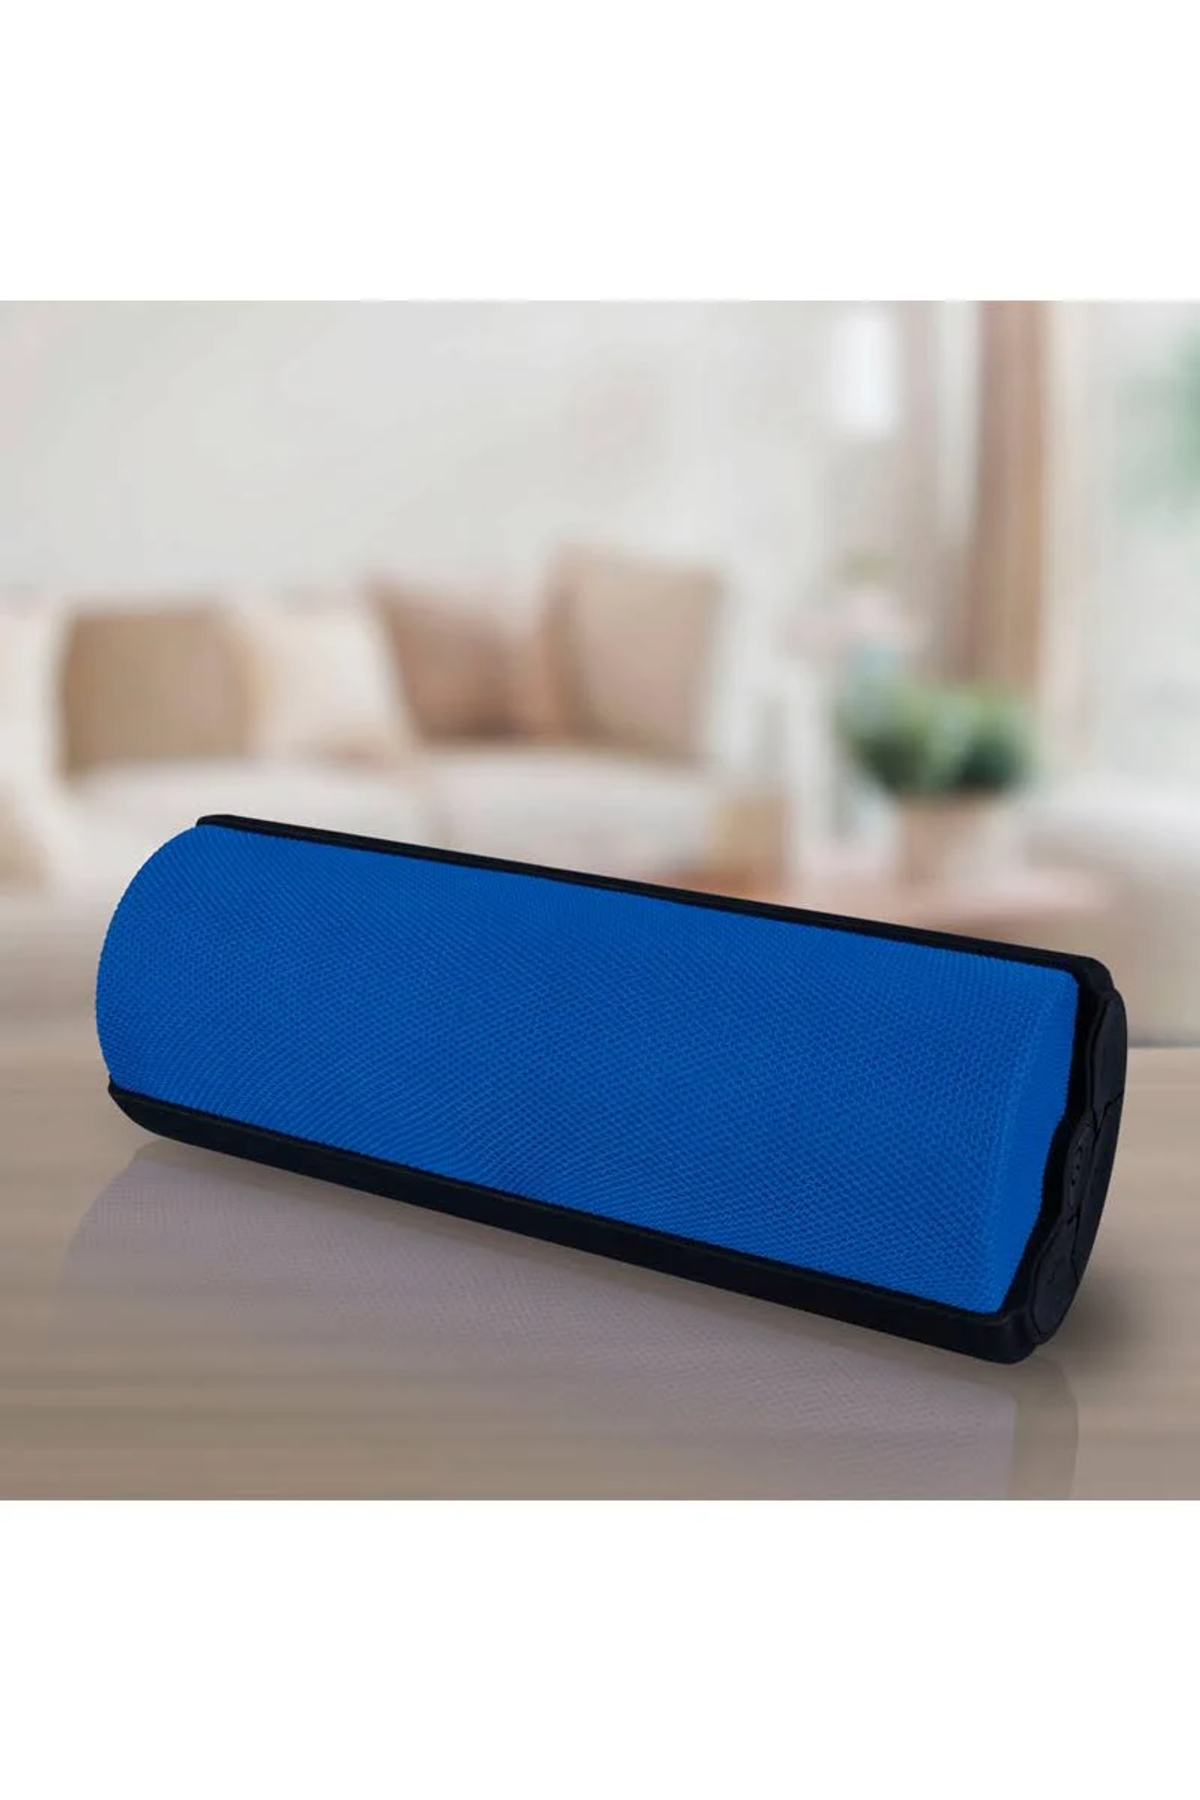 TOSHIBA TY-WSP70R Bluetooth Lautsprecher, Blau